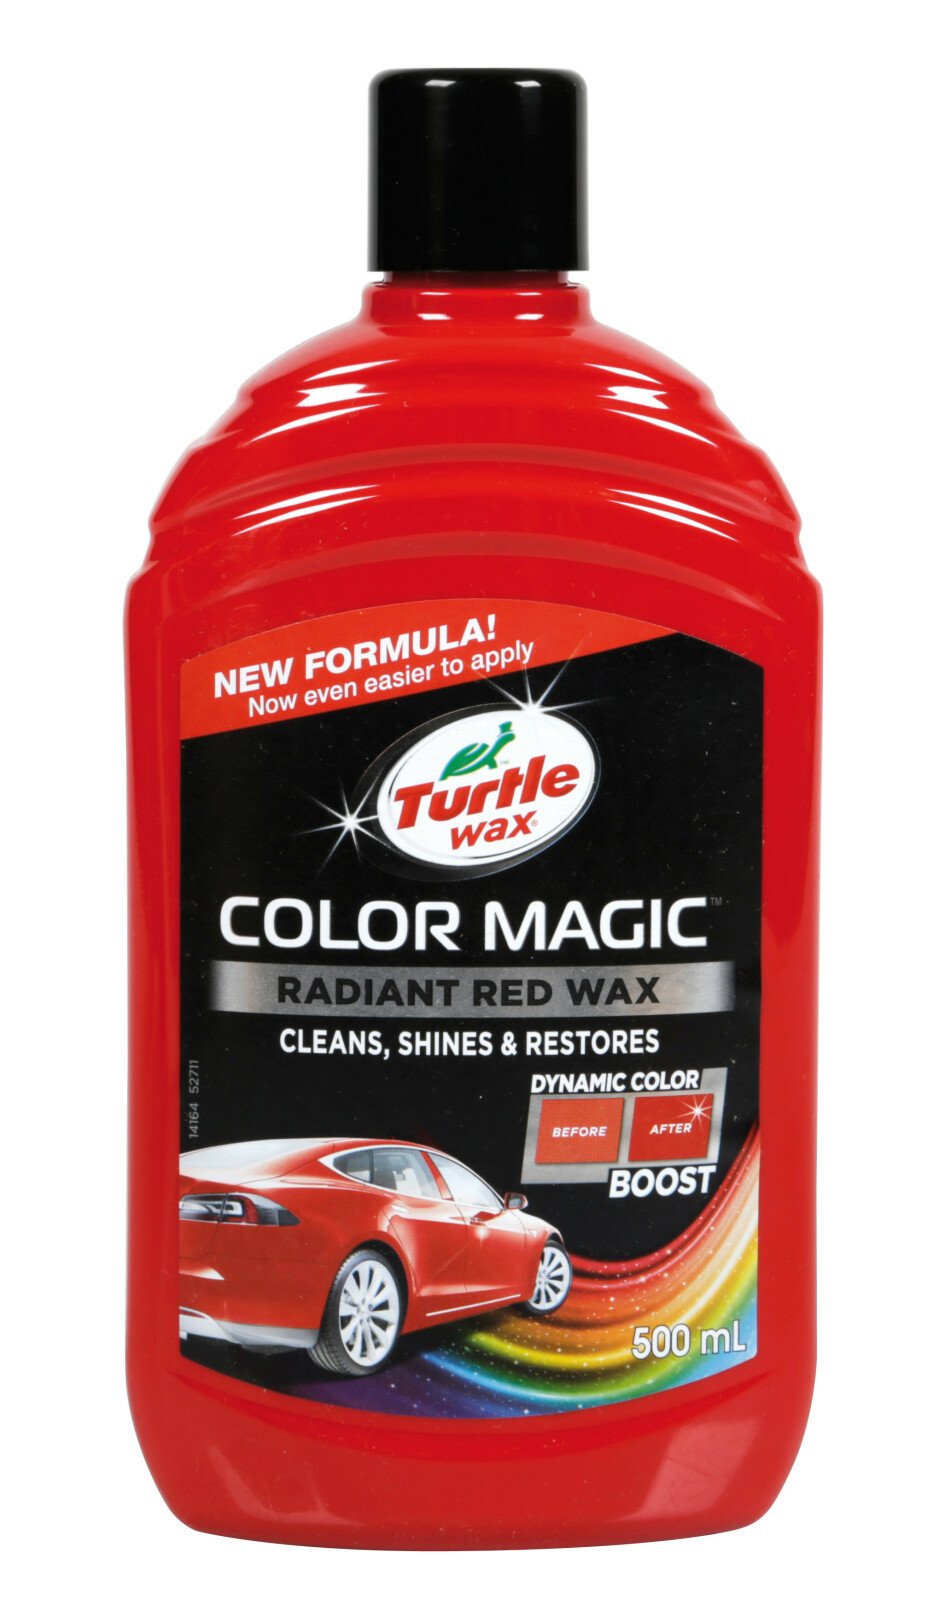 Turtle wax Color Magic car polishing paste 500 ml - Red thumb